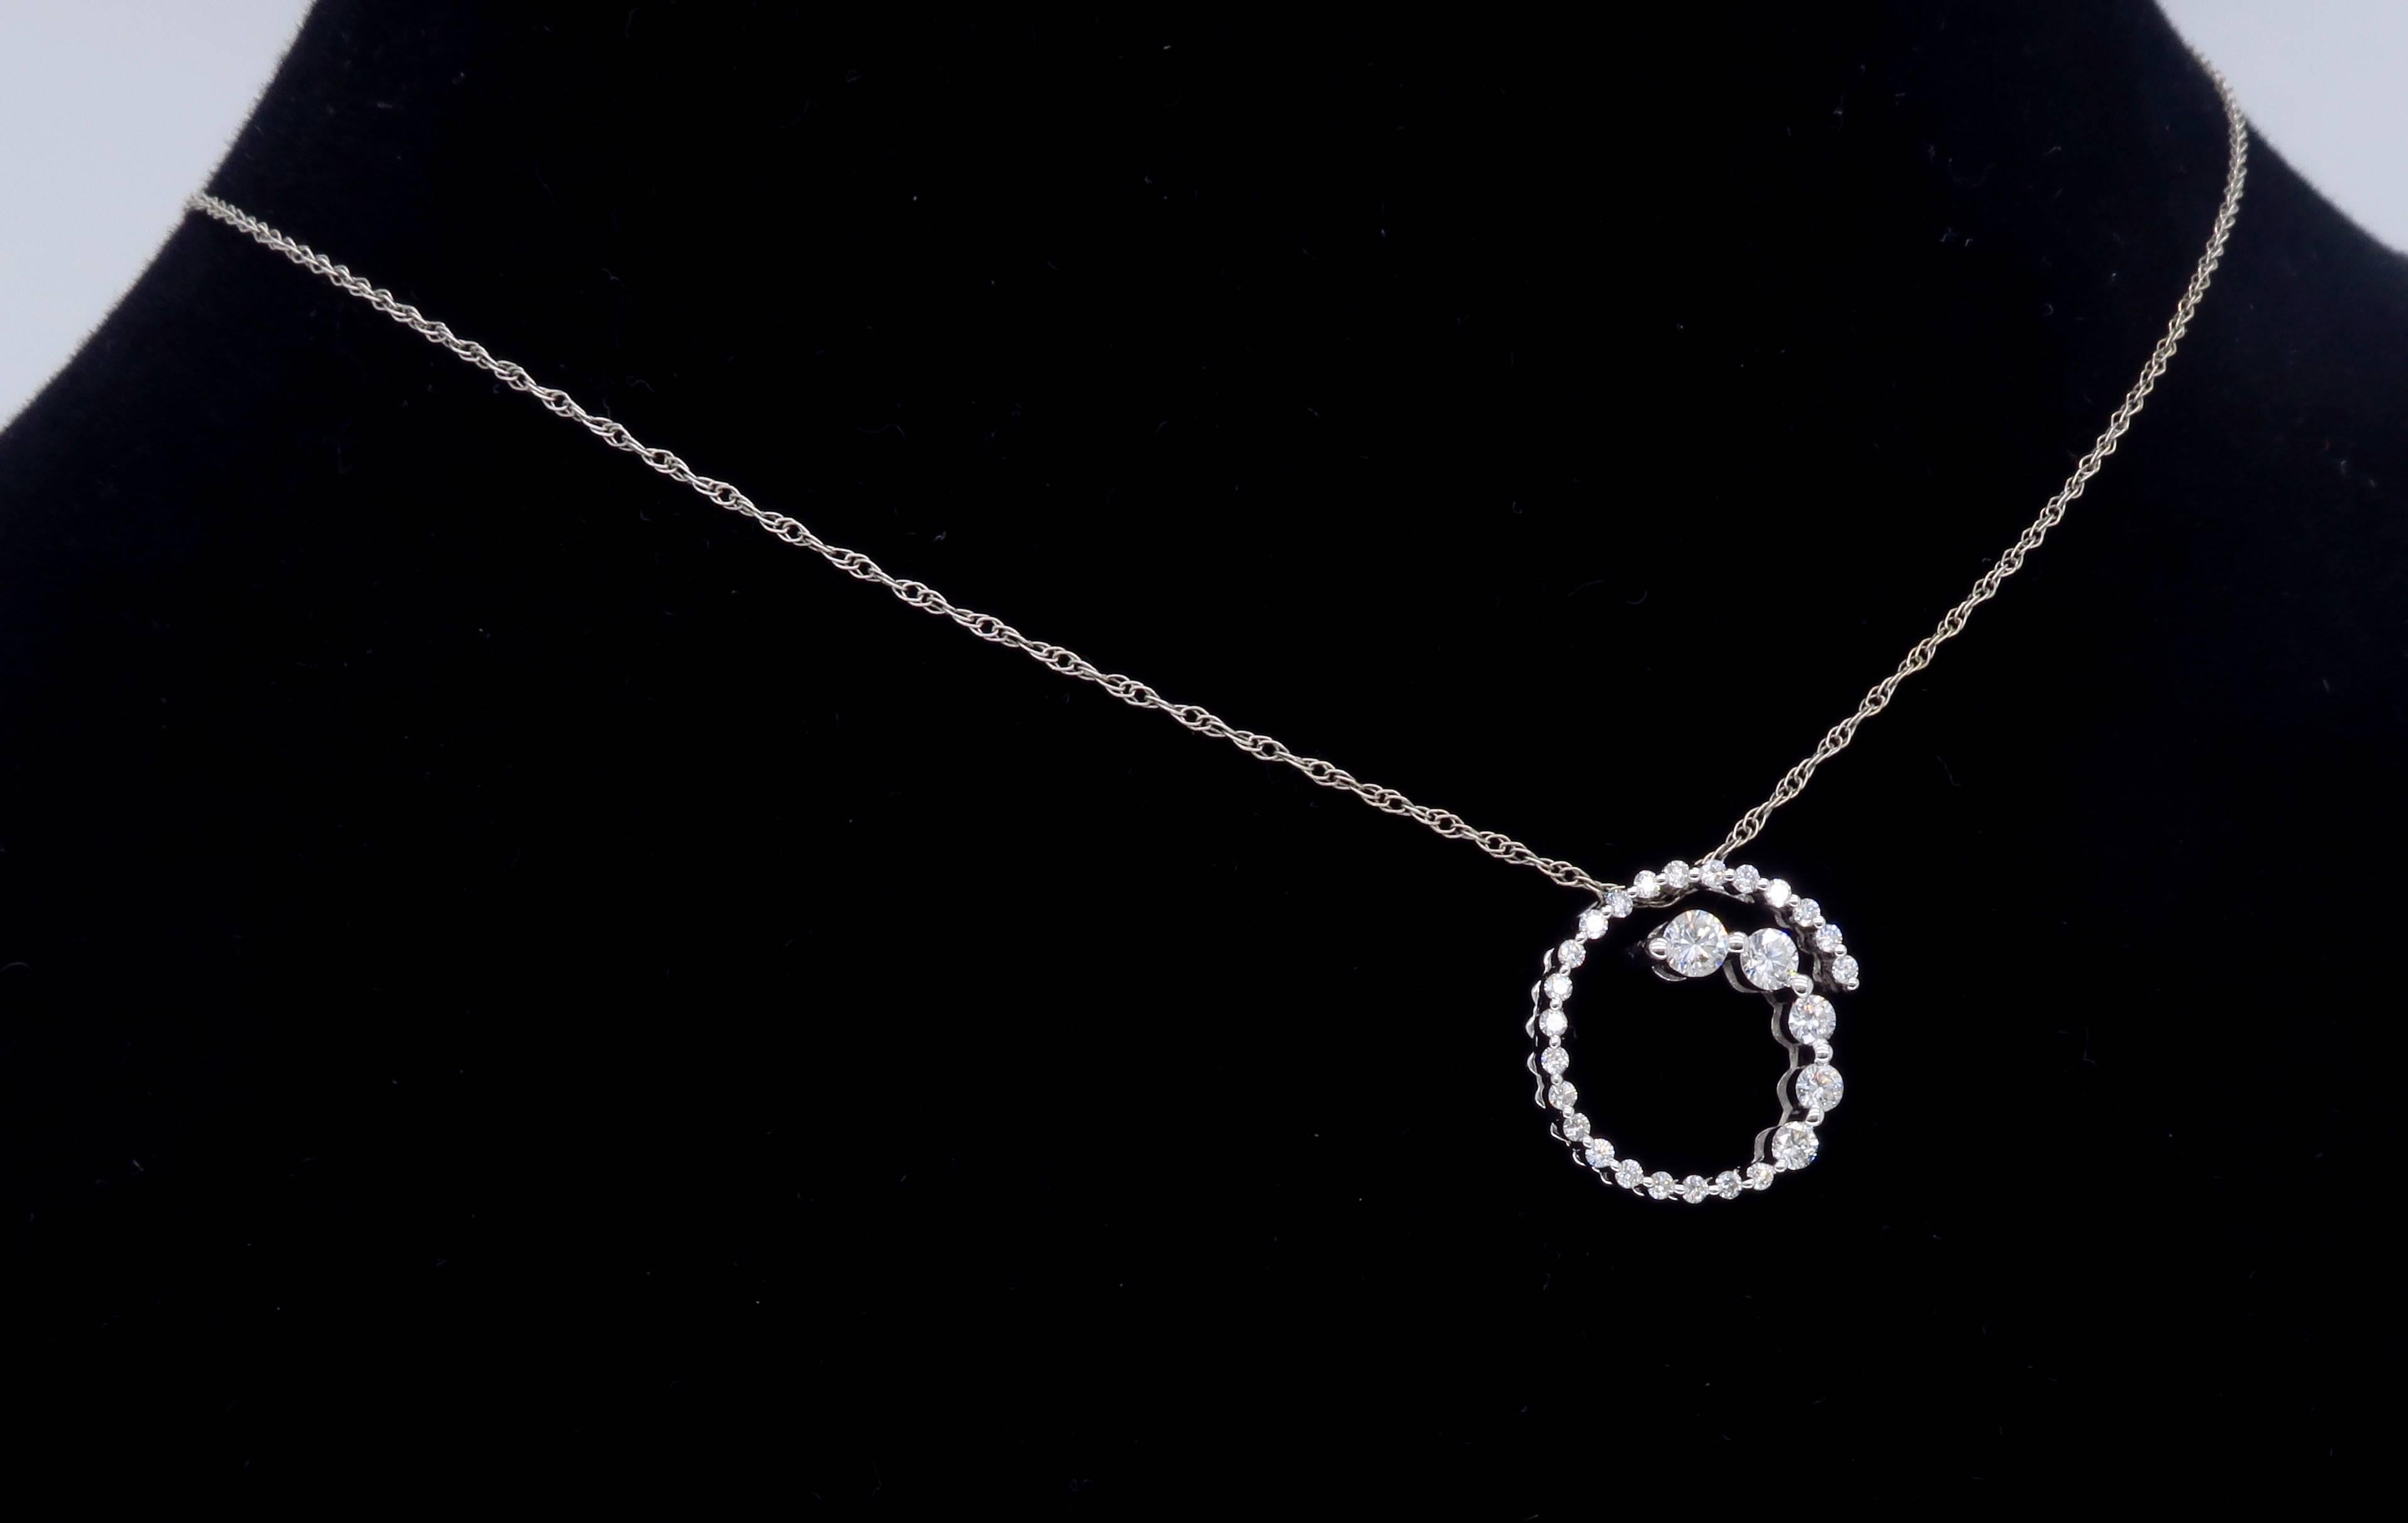  Diamond White Gold Pendant Chain Necklace  2